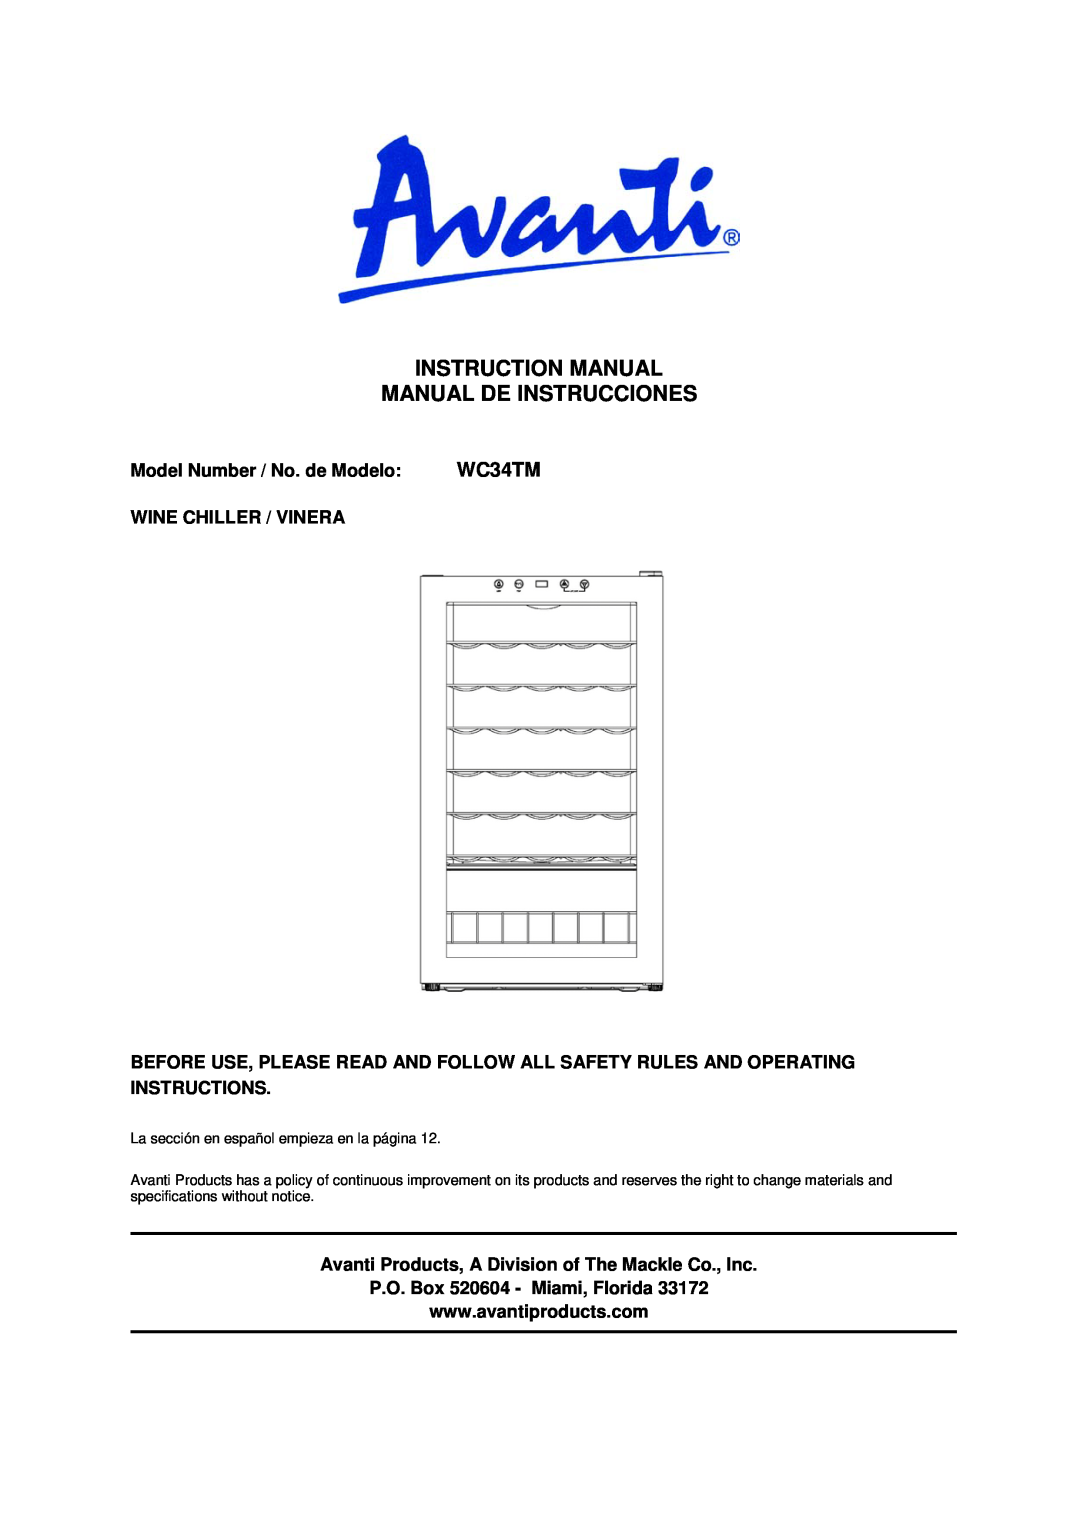 Avanti WC34TM instruction manual Model Number / No. de Modelo, Wine Chiller / Vinera, P.O. Box 520604 - Miami, Florida 